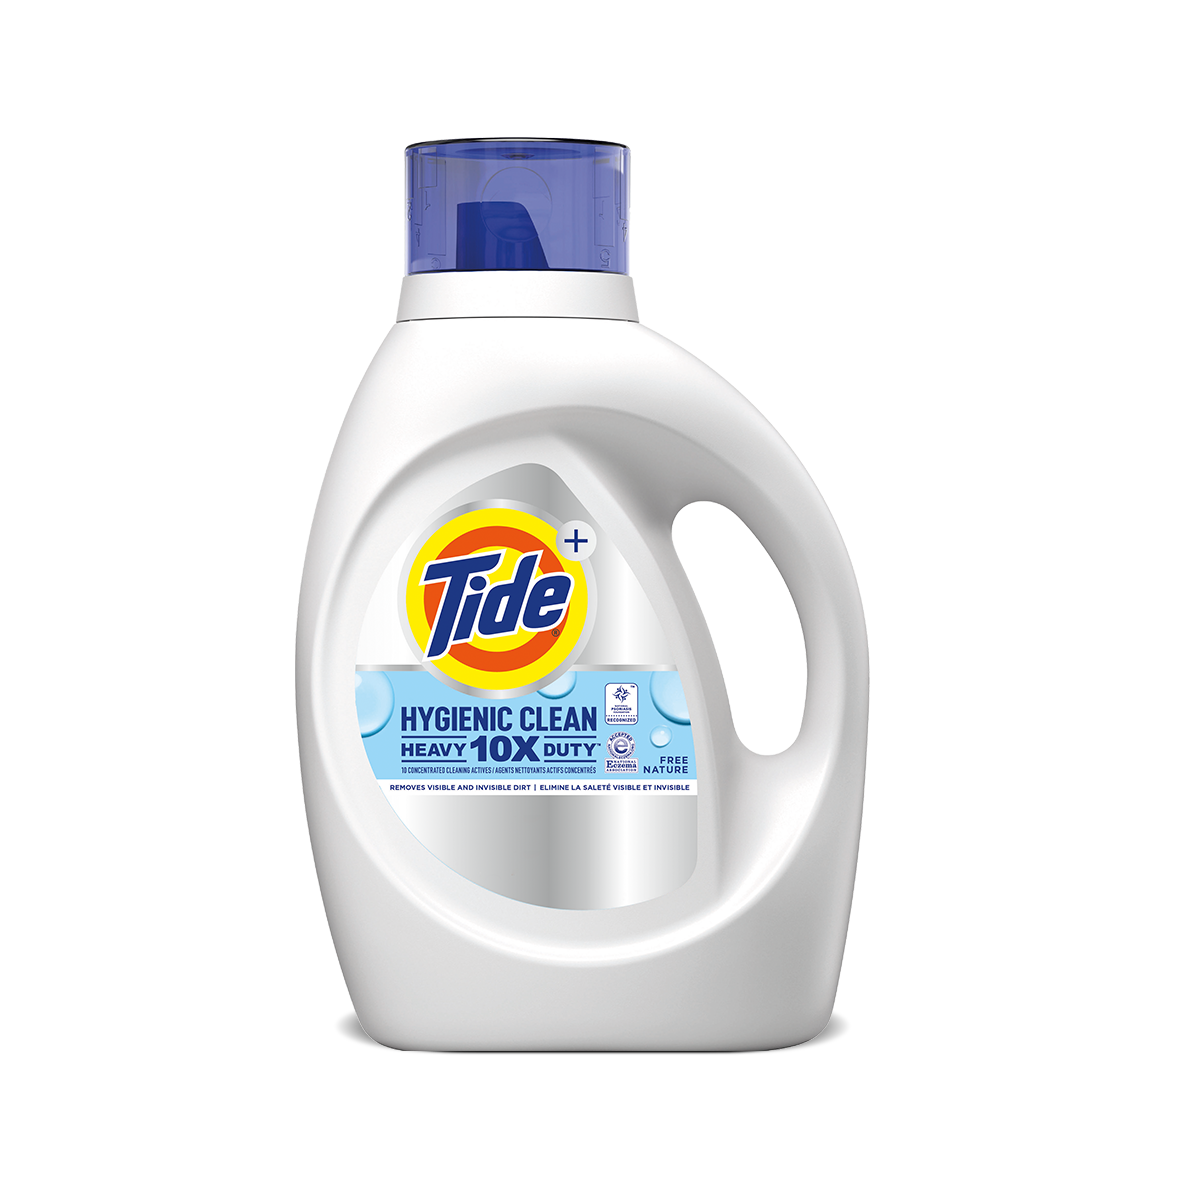 Detergente líquido para ropa Tide Hygienic Clean Heavy Duty 10X Free